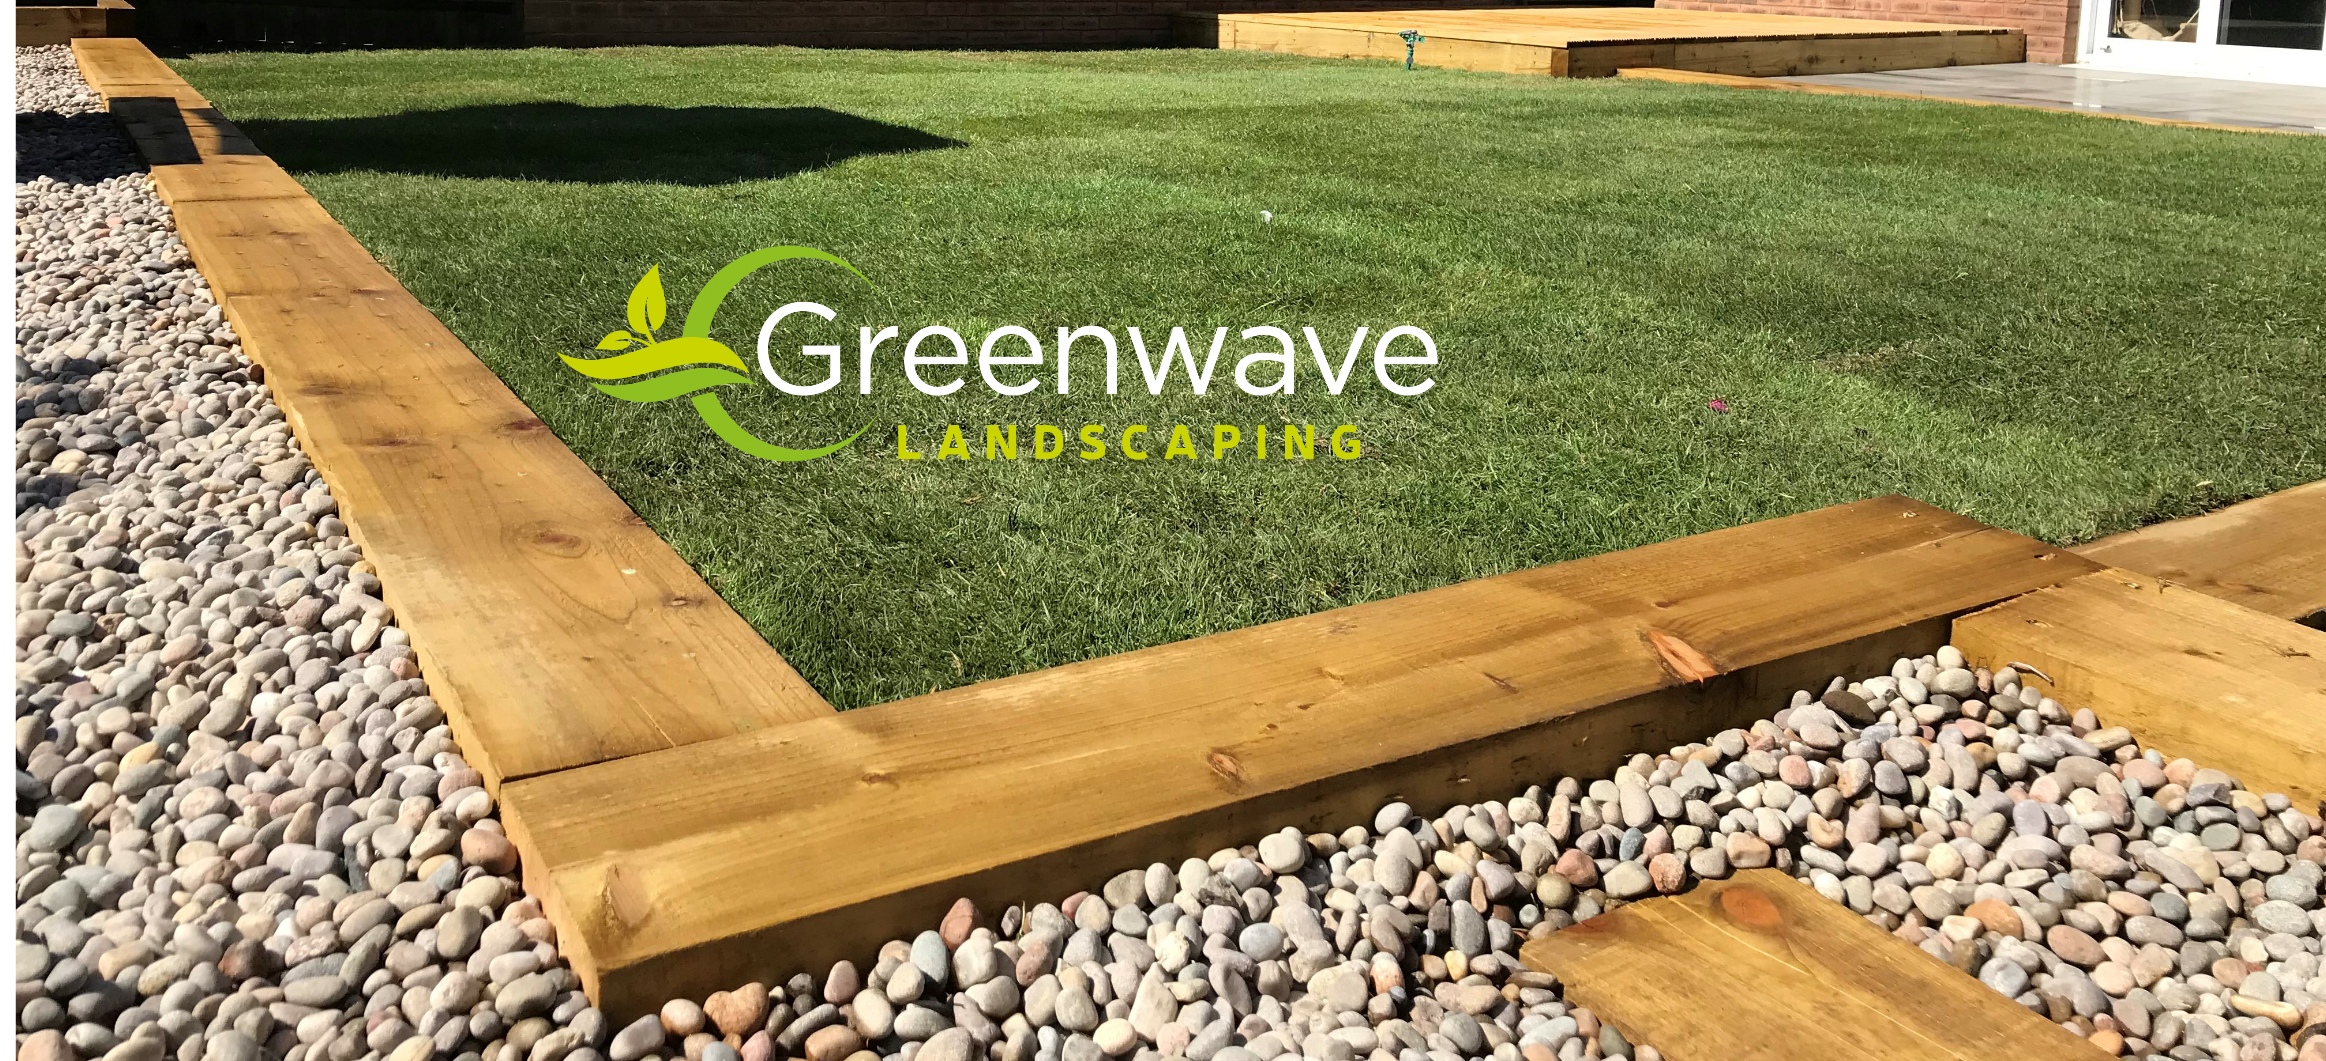 Greenwave landscaping bristol patios decking lawns